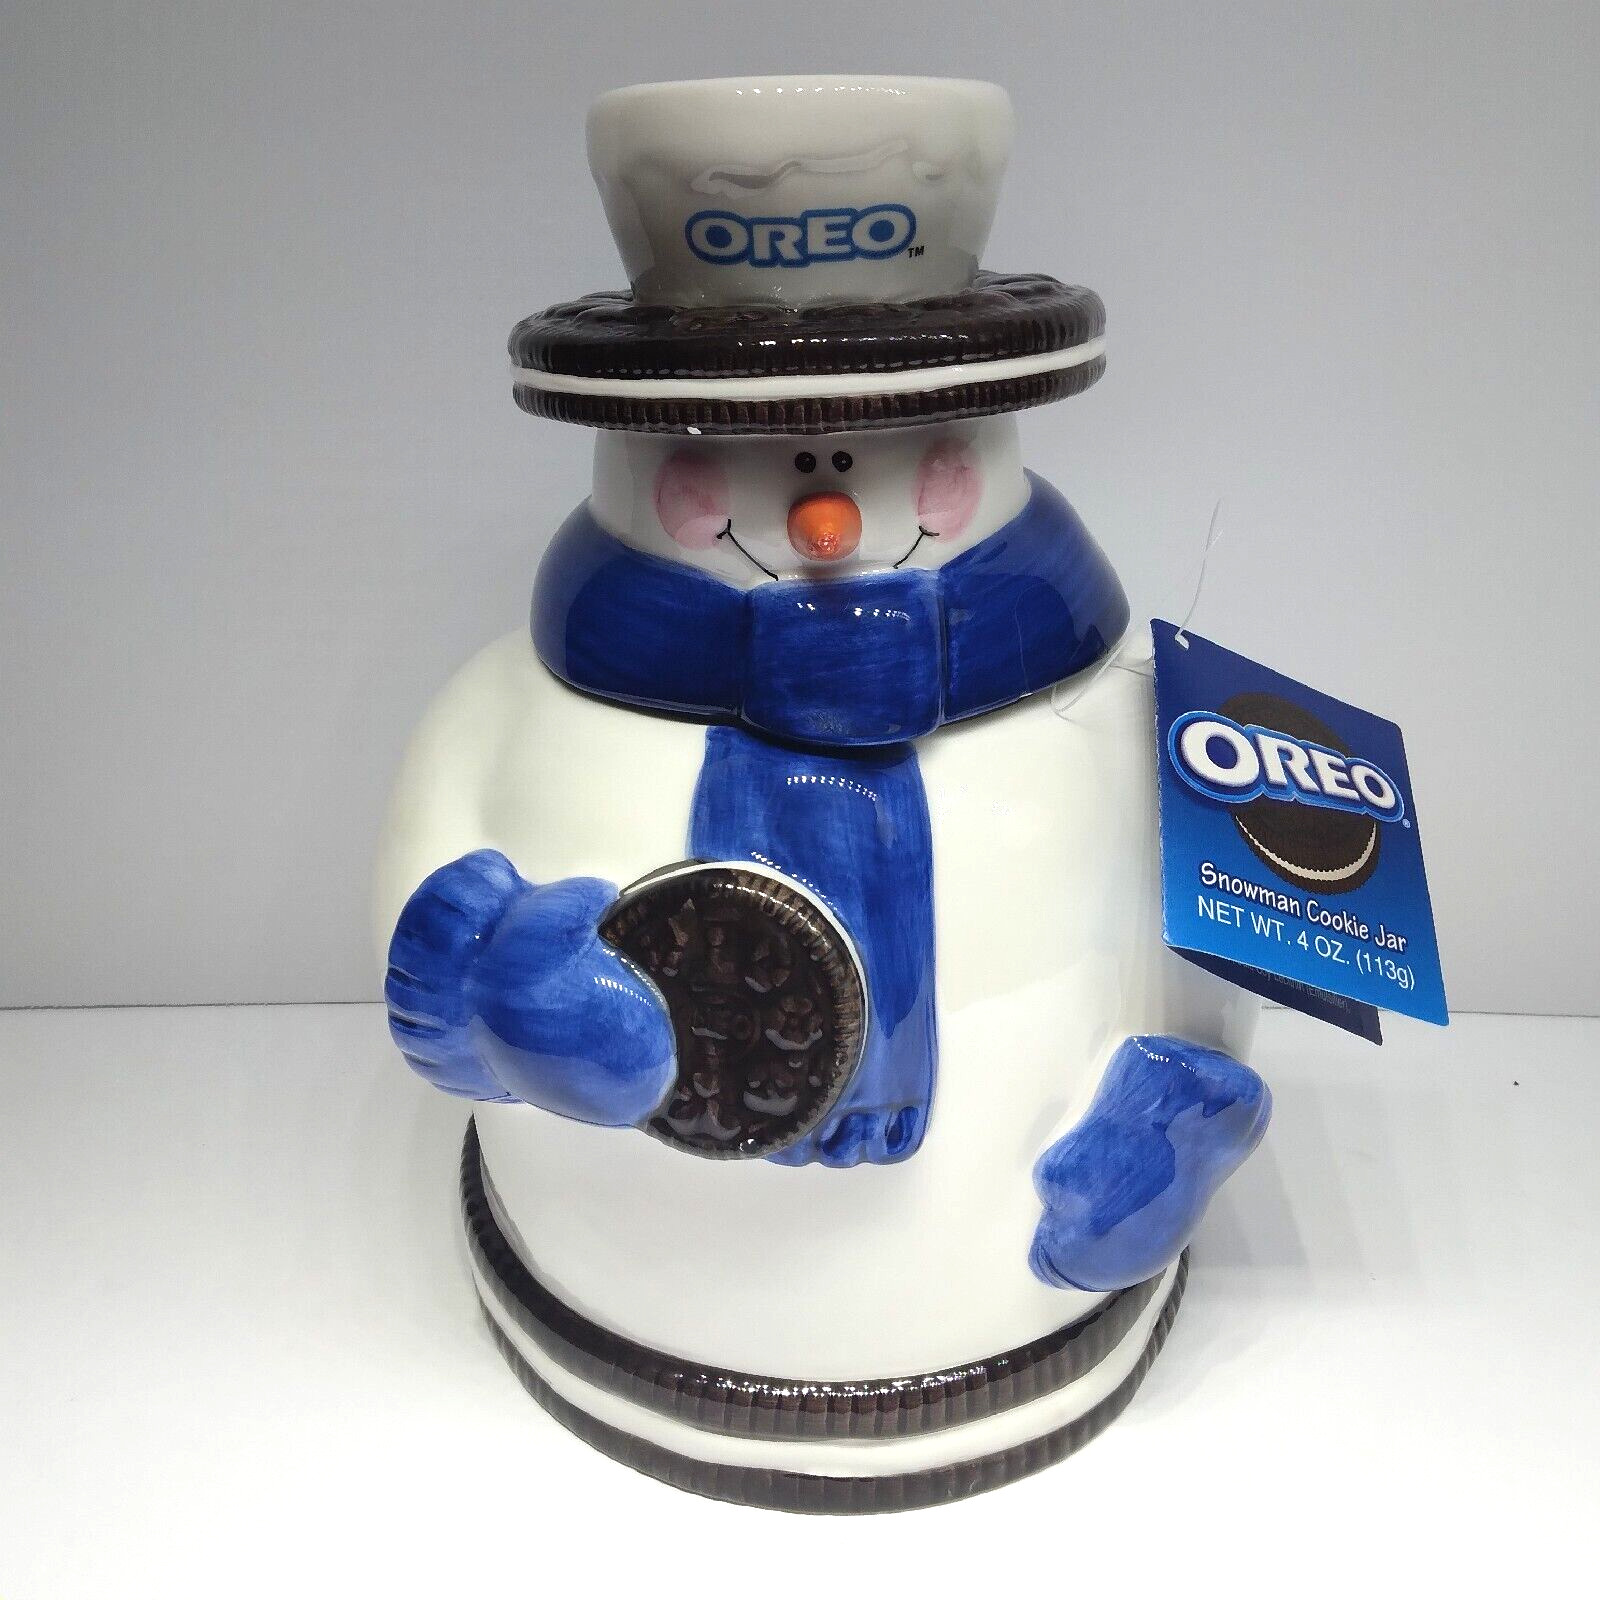 Nabisco Oreo Cookie Jar Snowman Ceramic Winter Chanukah Christmas Holiday 2001